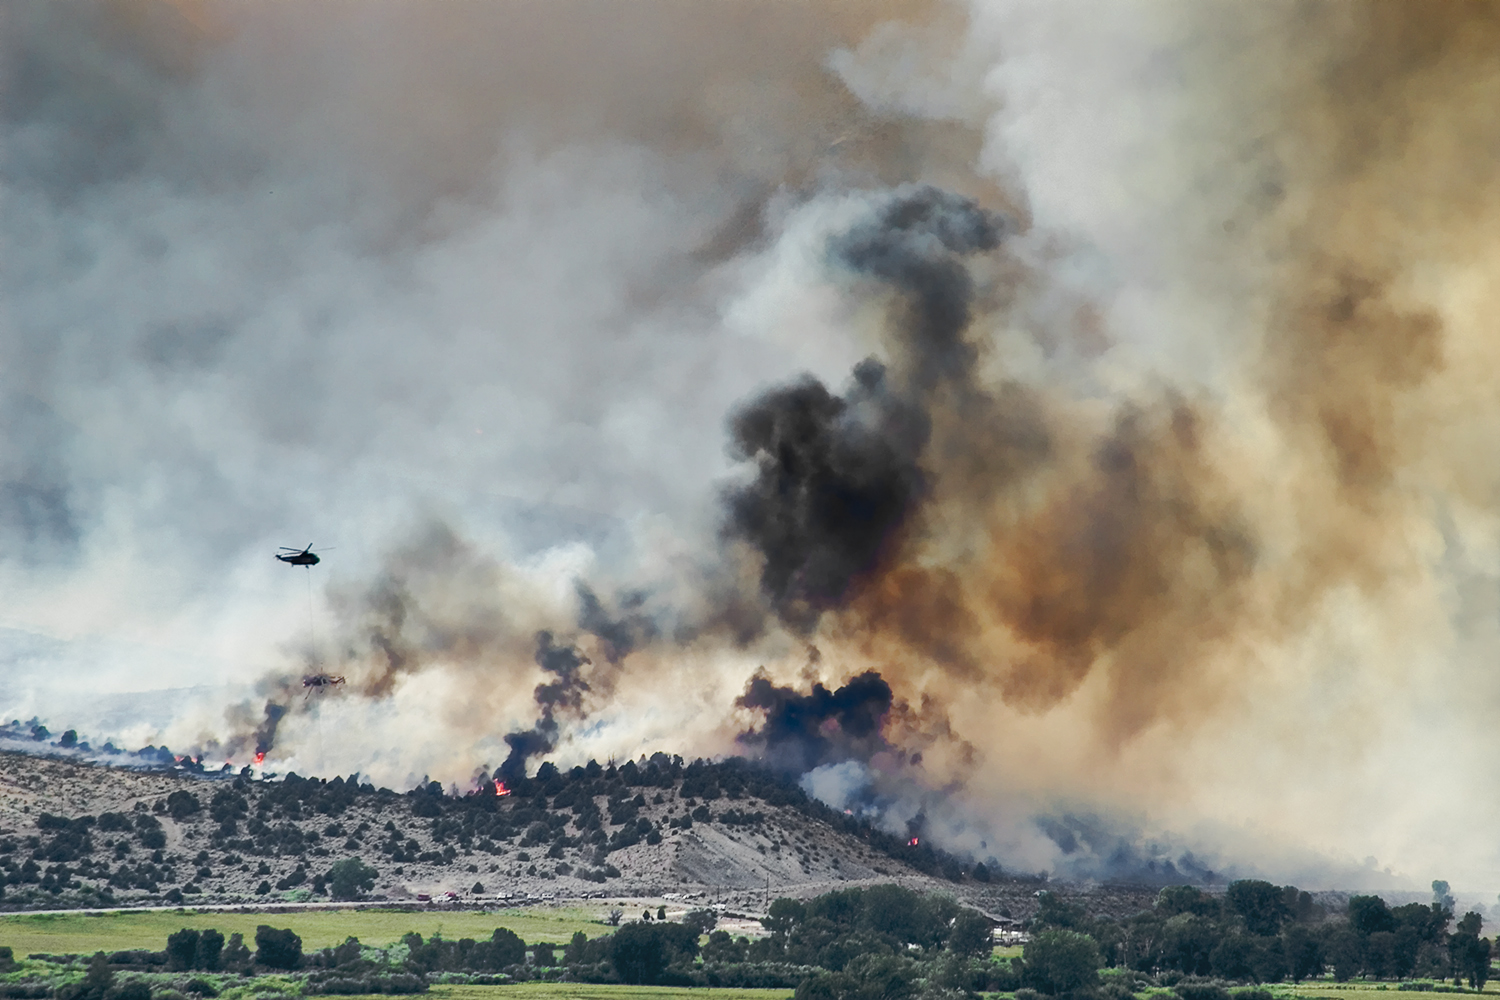 The Vittorio Fire, Antelope Valley, 2004